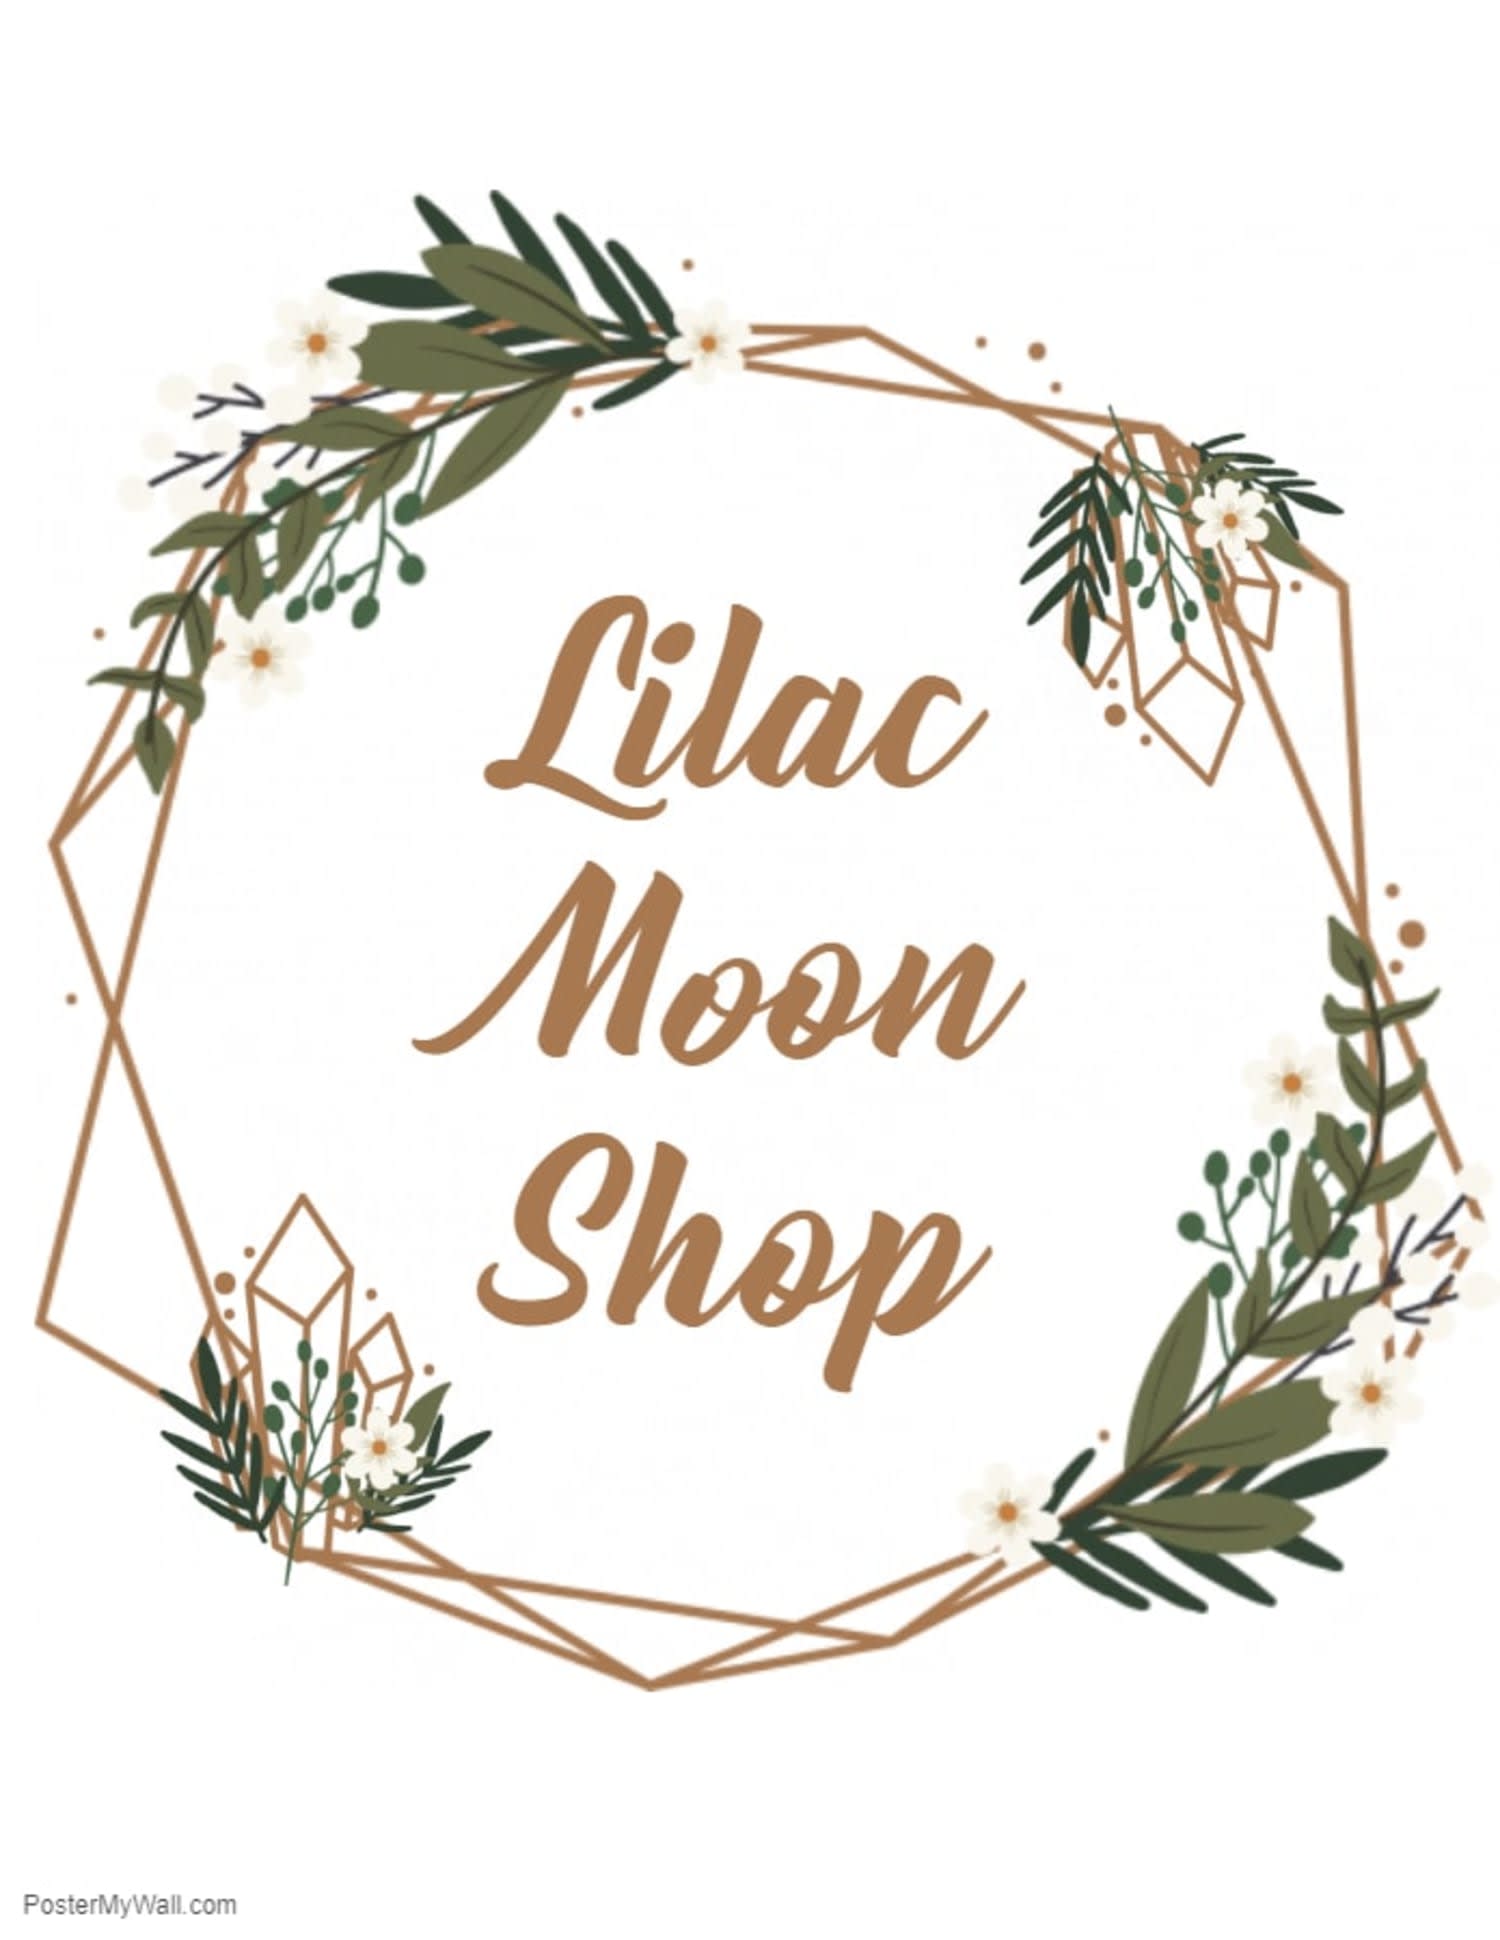 Lilac Moon Shop